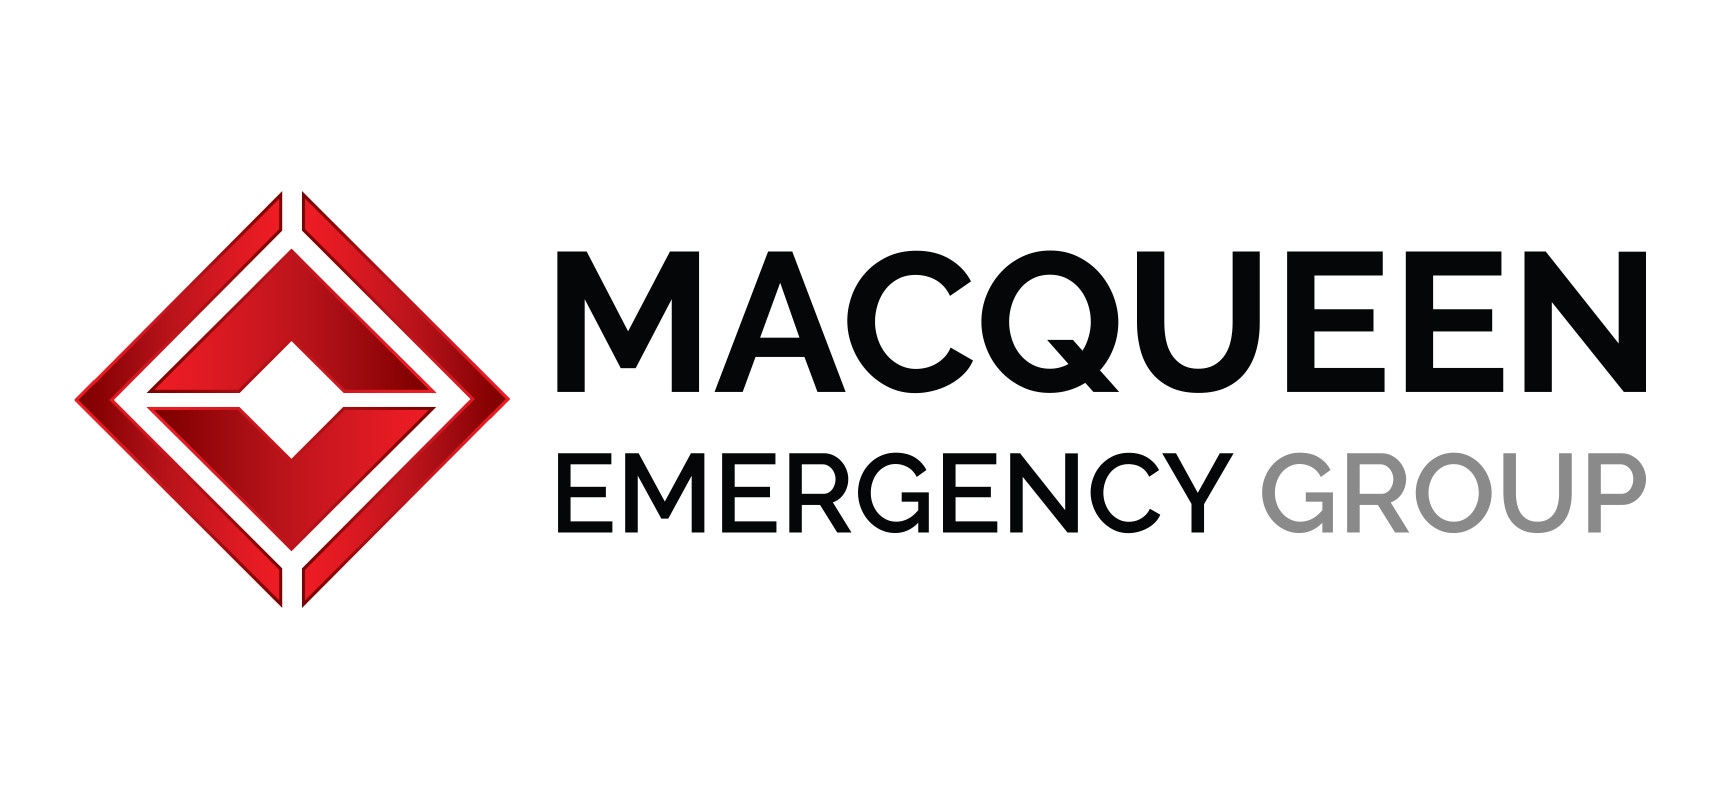 Macqueen-Emergency-Group